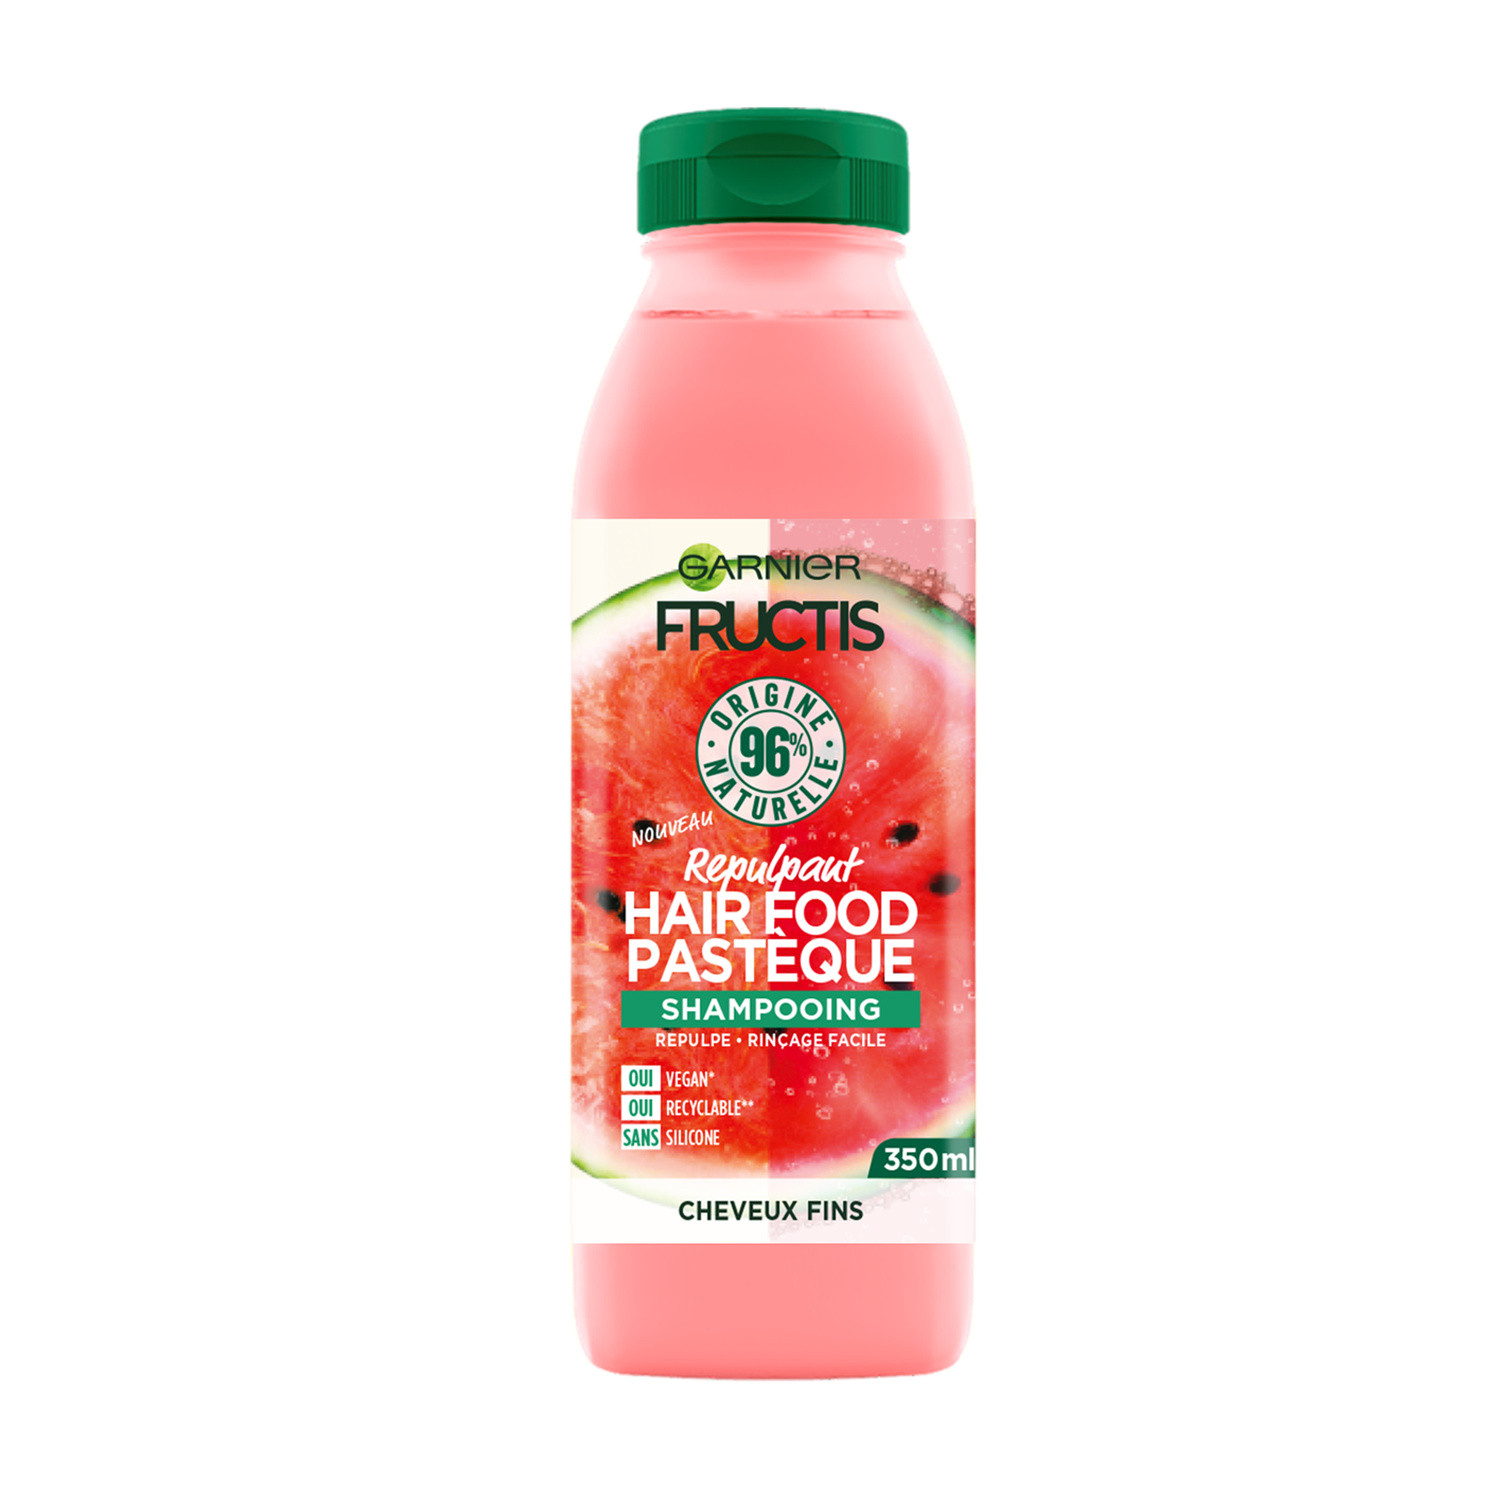 Hair Food Watermelon My Garnier | French | Buy Online Fructis Grocery Shampoo